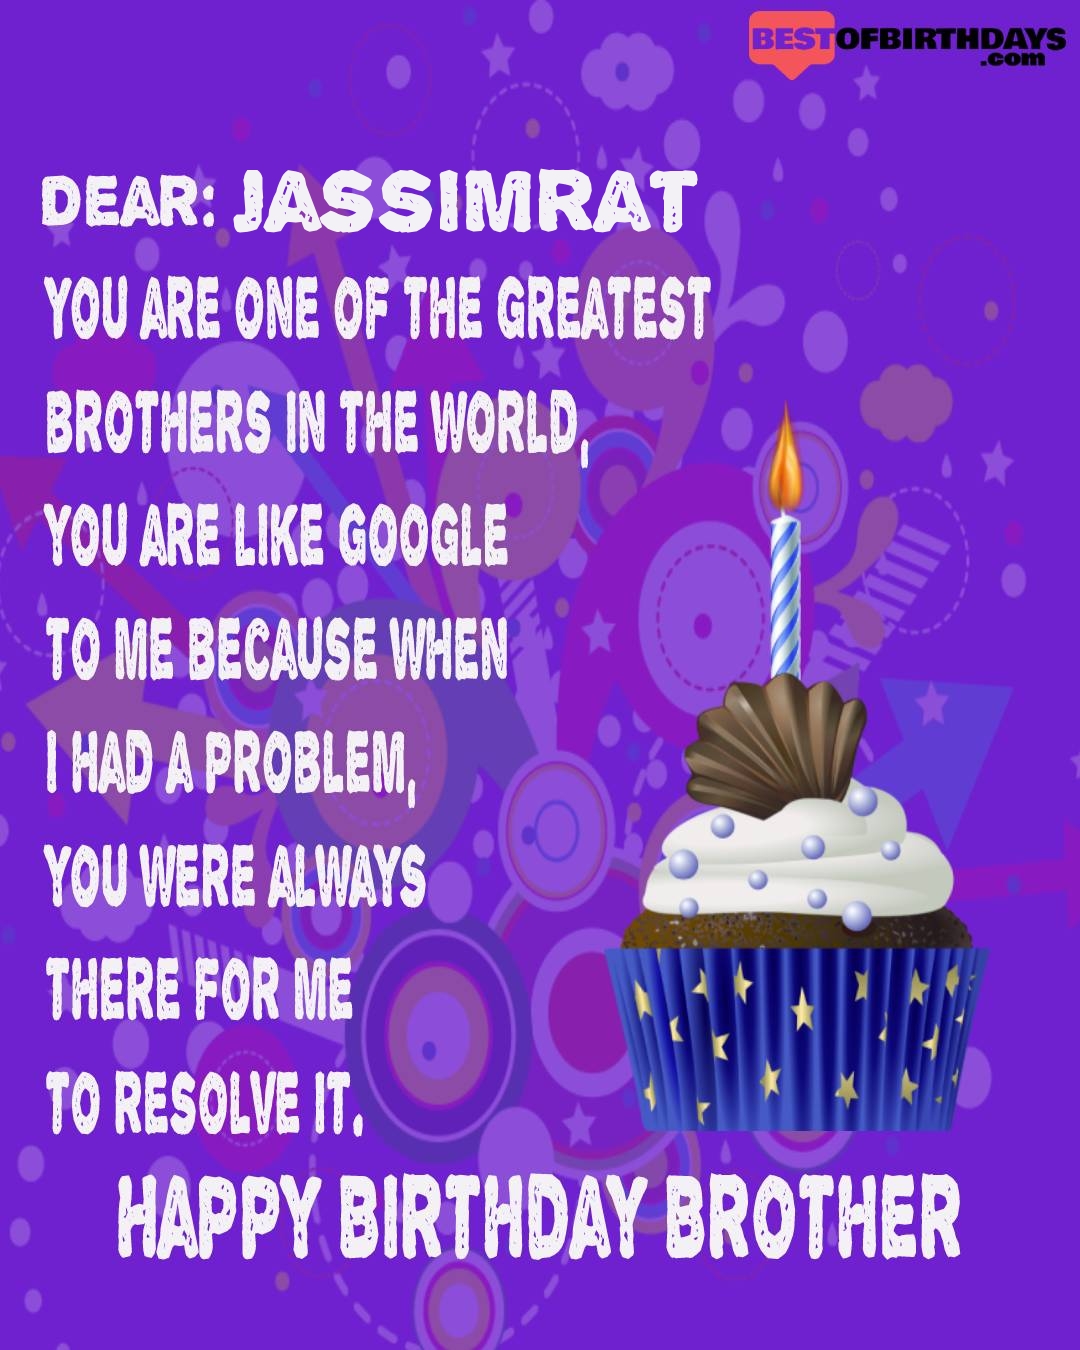 Happy birthday jassimrat bhai brother bro